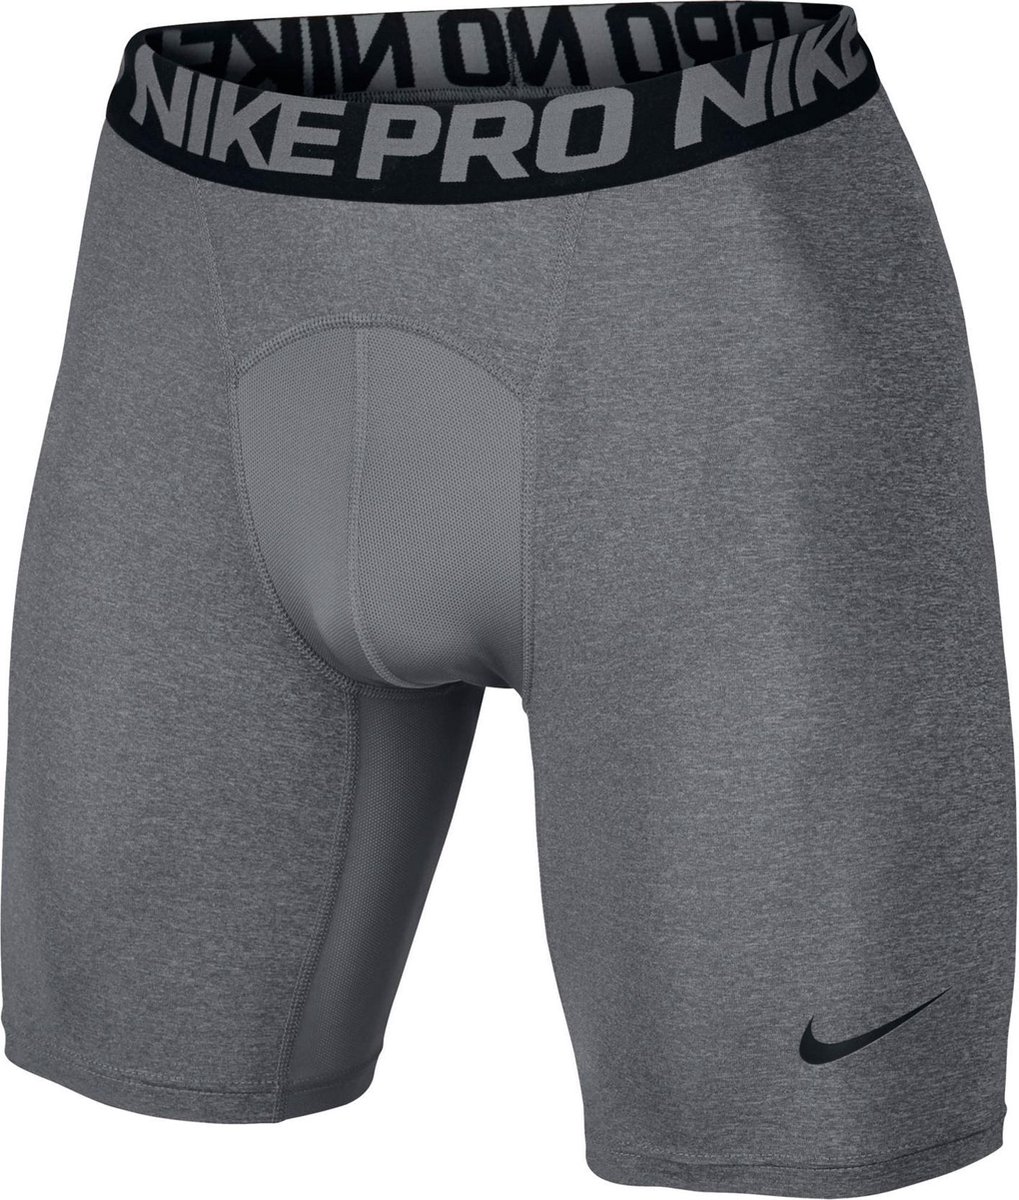 Nike Pro Cool Compression Short - Loopbroek - Heren - Grijs/Zwart - Maat L  | bol.com